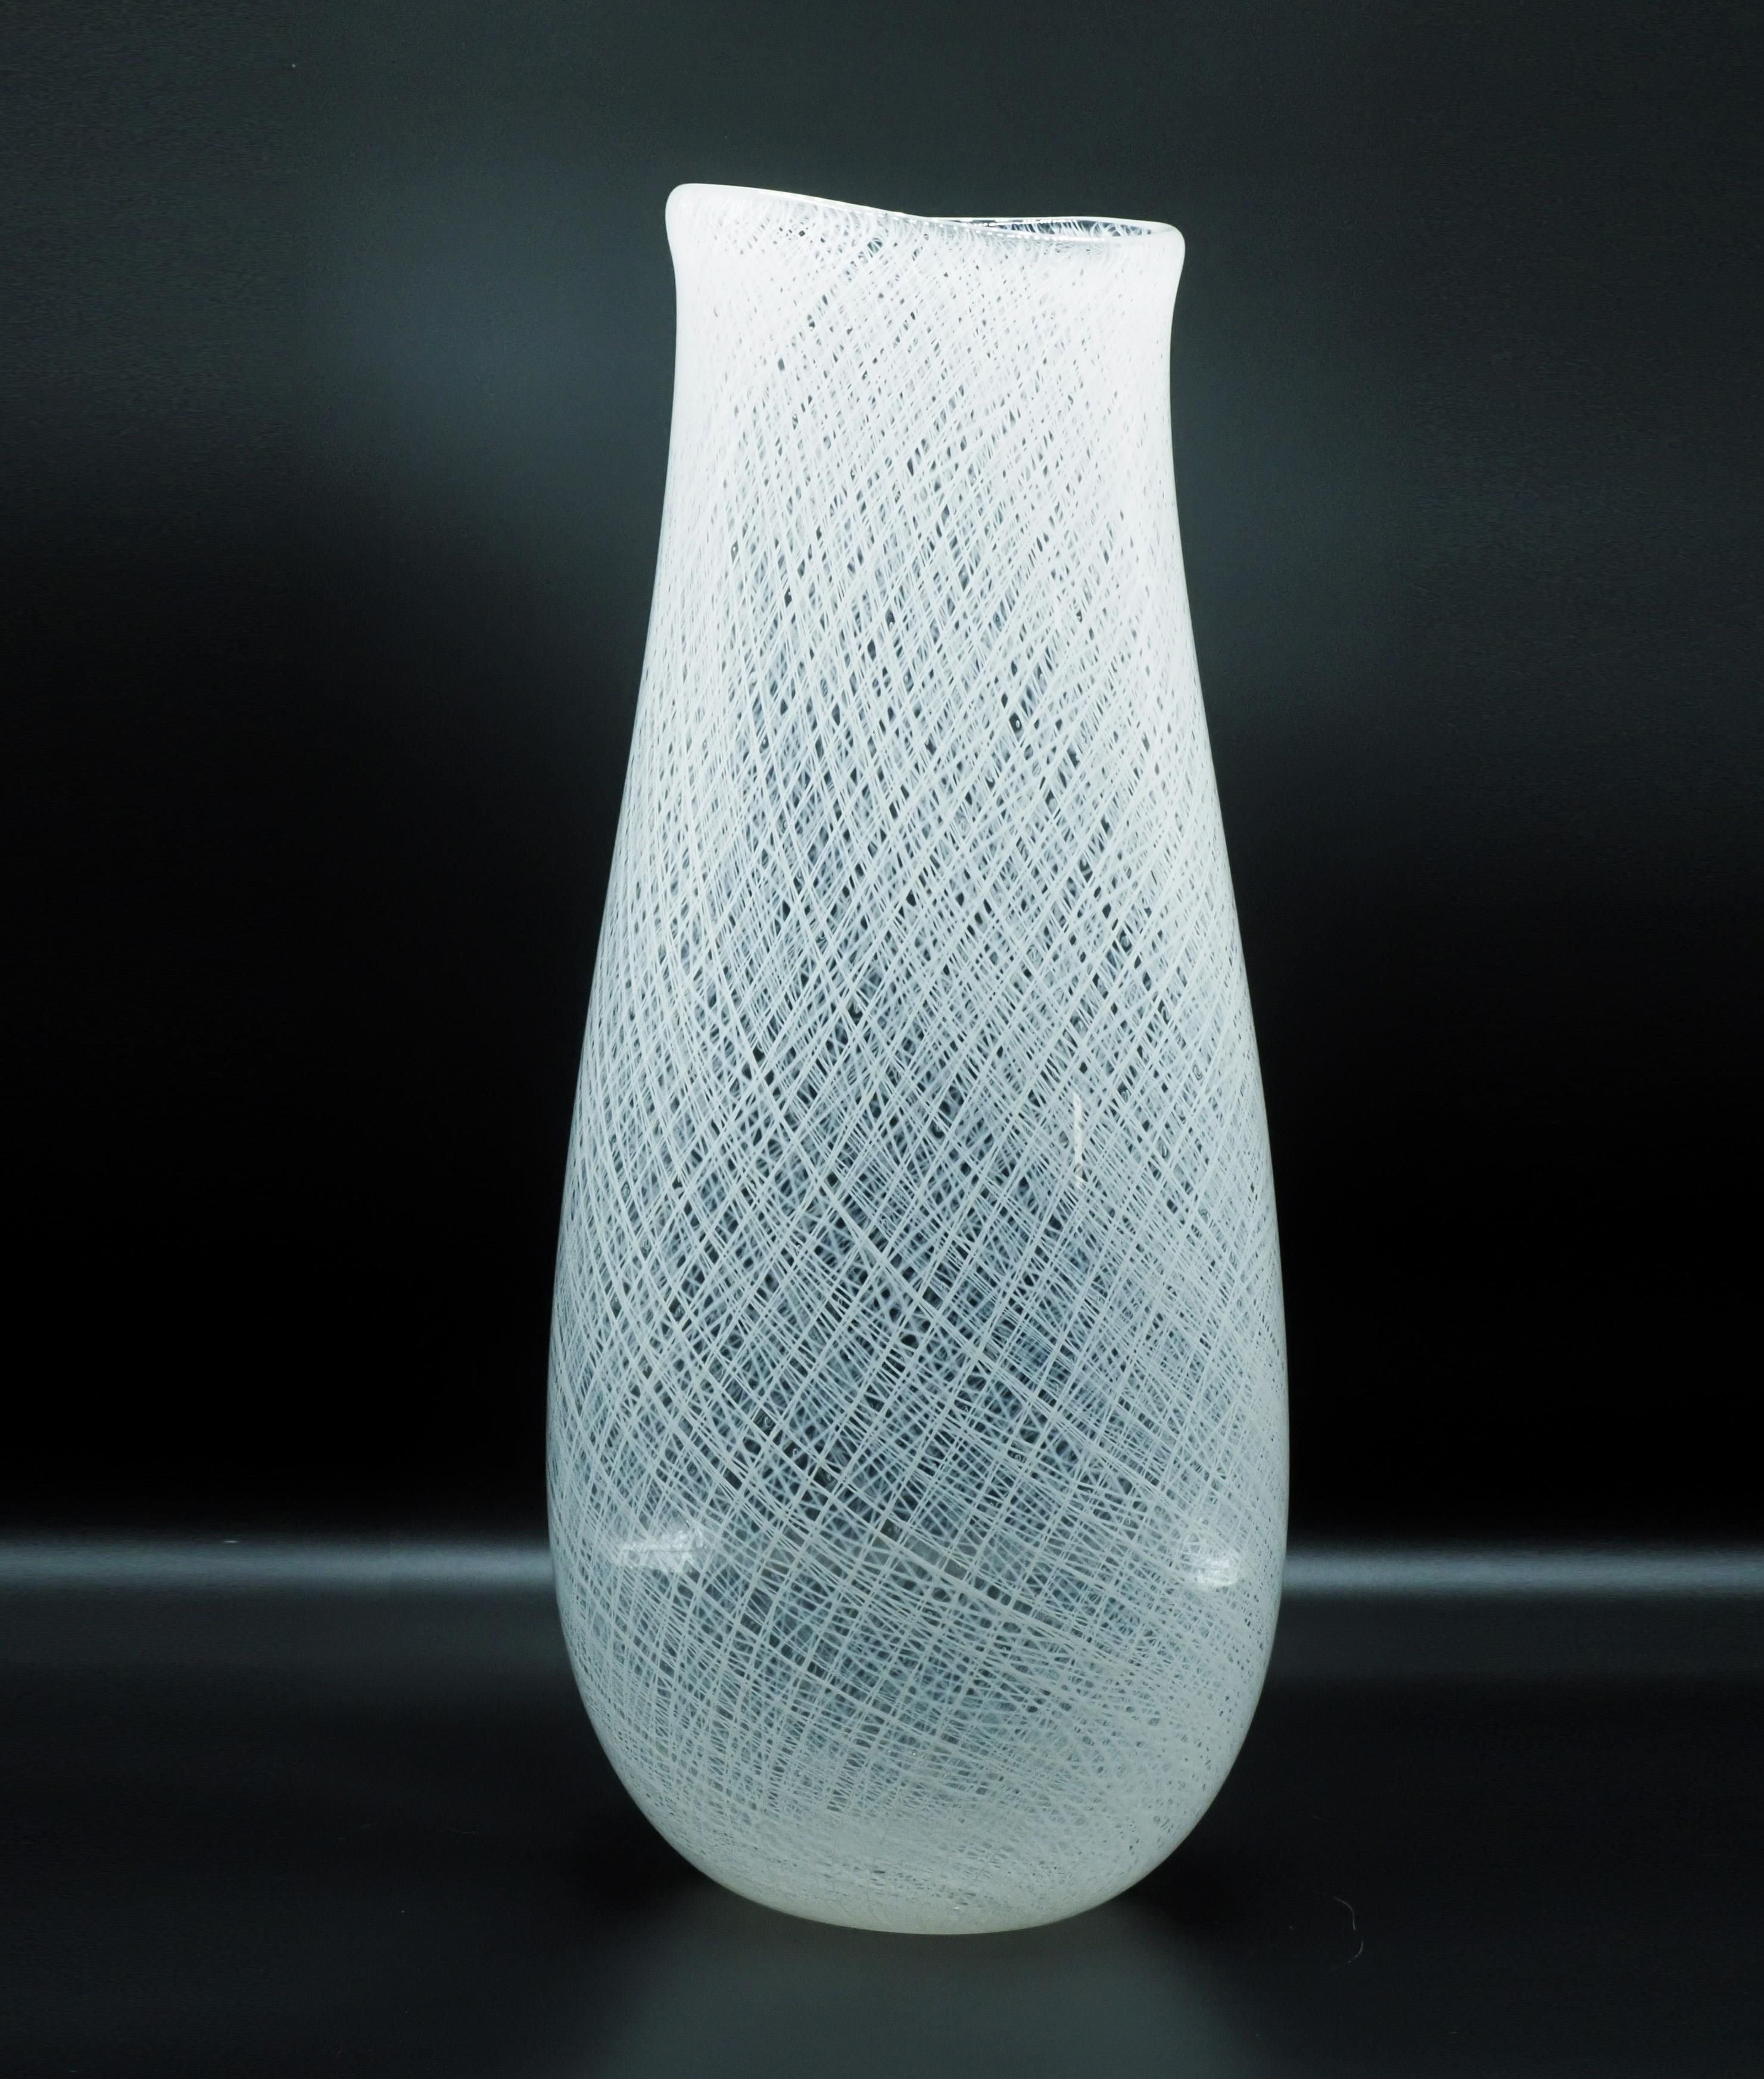 Glass vase “Zanfirico” by master glassblower Archimede Seguso – Murano 1970s
Glass vase “Zanfirico” creared by the master glassblower Archimede Seguso (1909 – 1999) in 1970 circa.
The name of the artwork comes from the so-called “zanfirico a canne